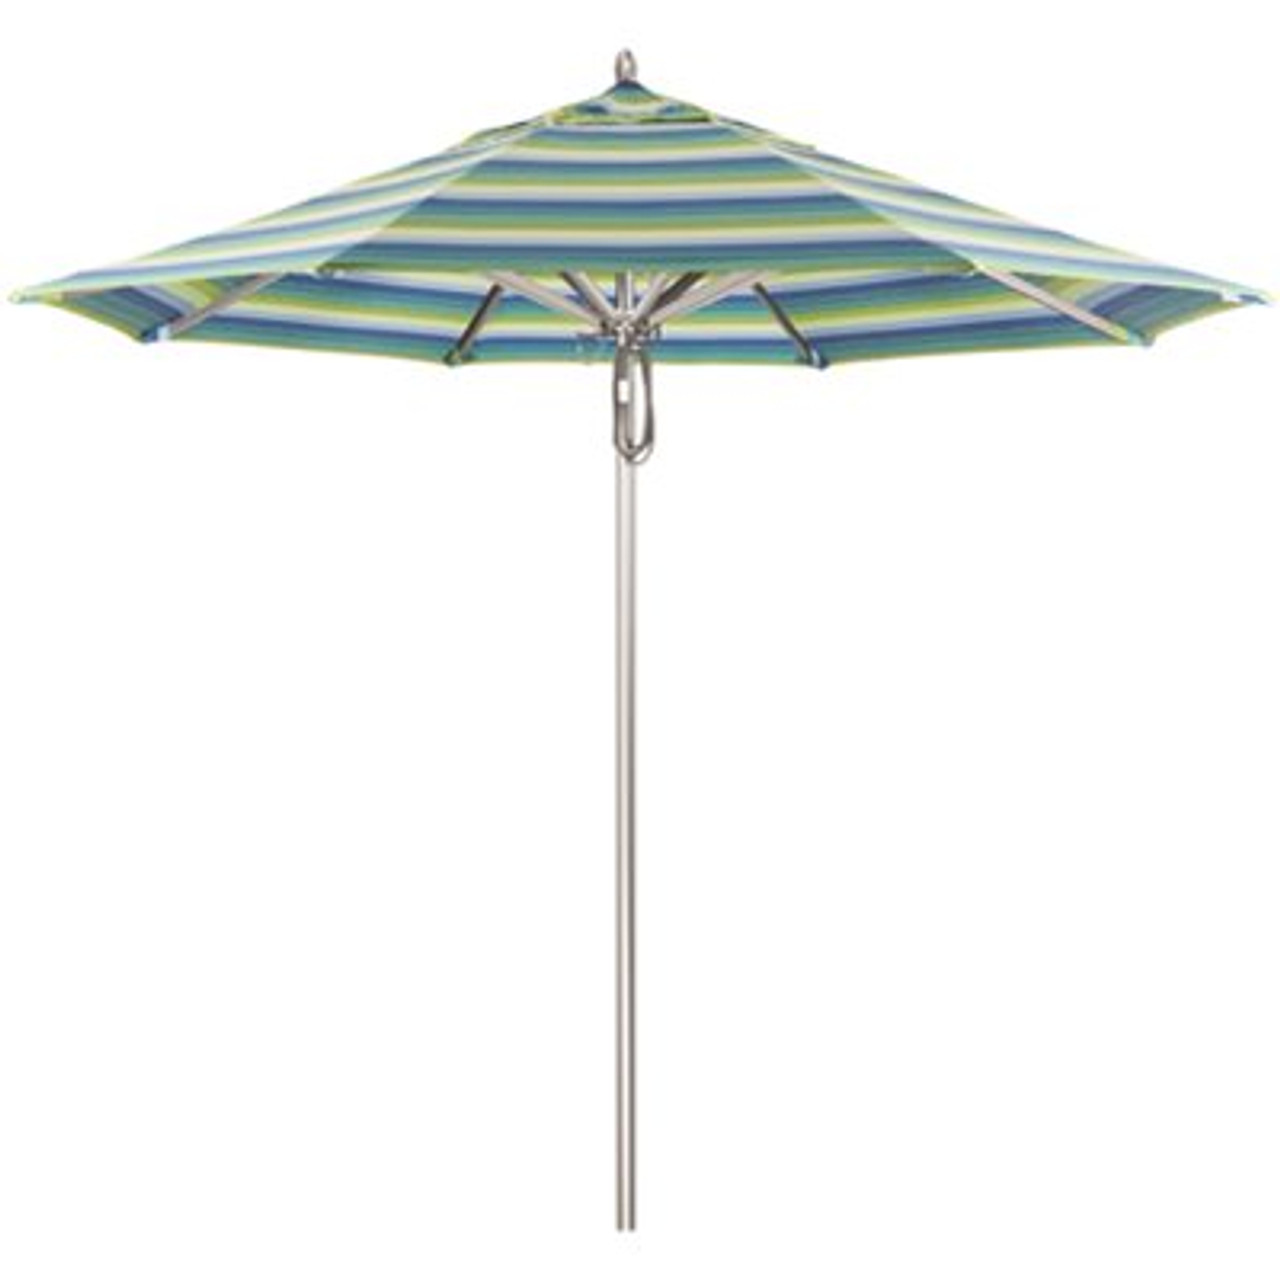 California Umbrella 9 ft. Silver Aluminum Commercial Market Patio Umbrella with Pulley Lift in Seville Seaside Sunbrella